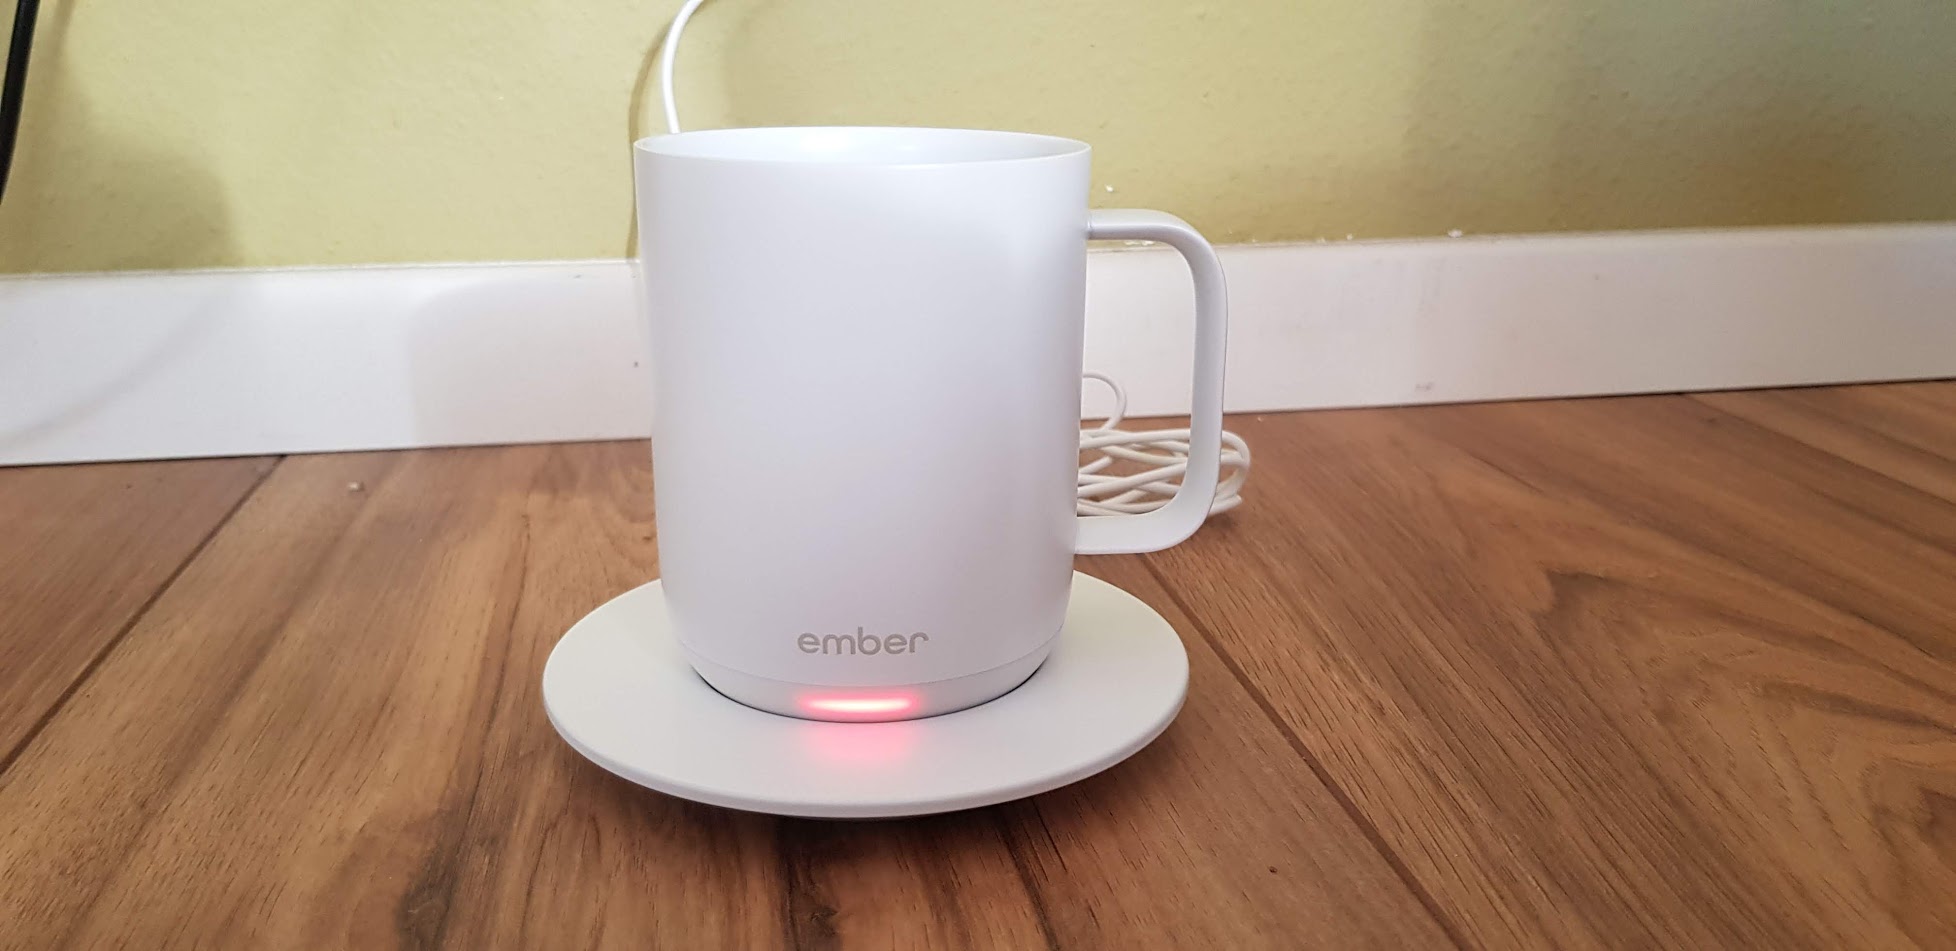 An IoT coffee mug